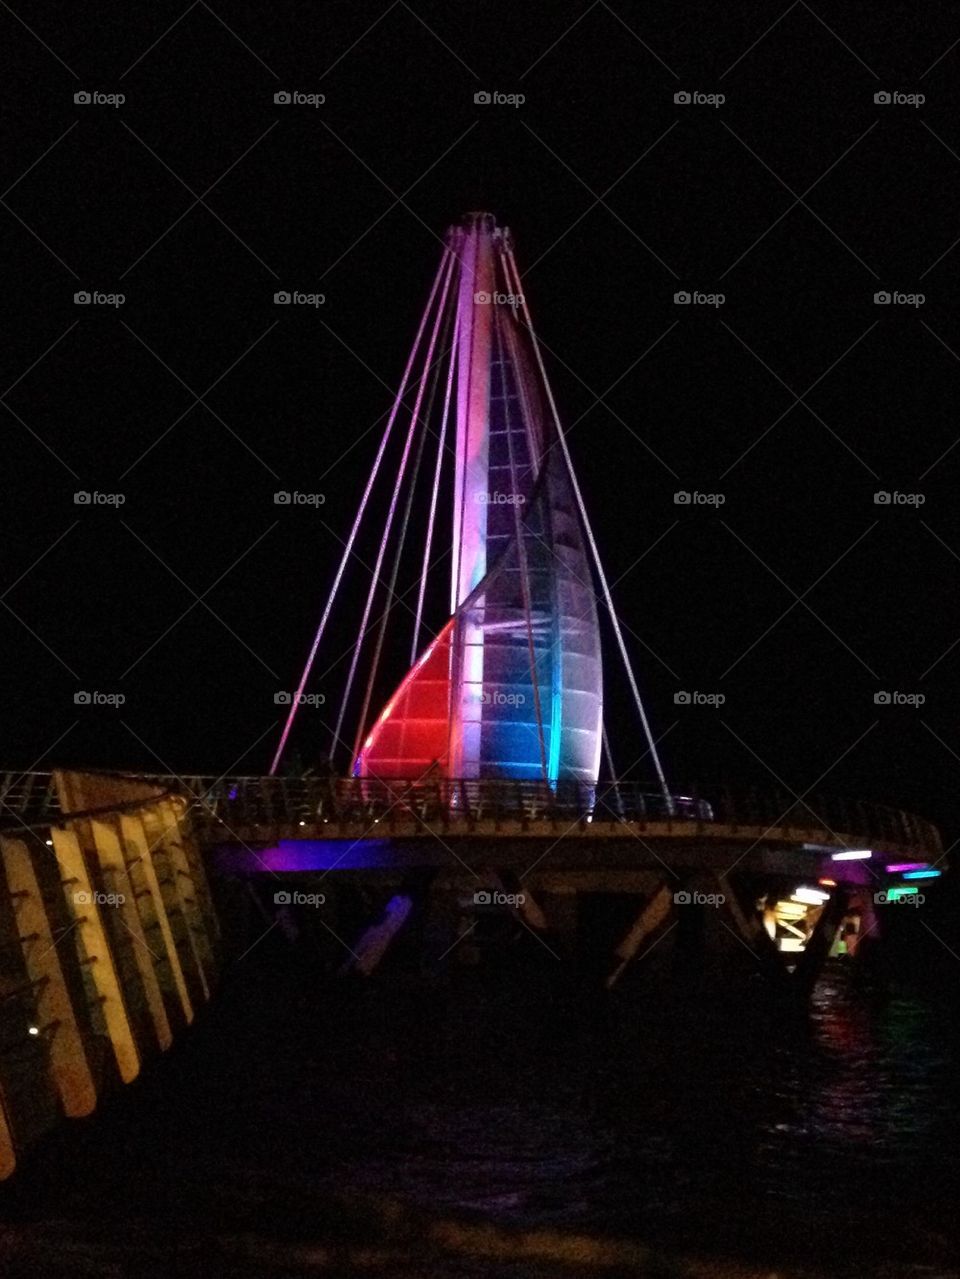 Puerto Vallarta Pier Tower #2, nighttime